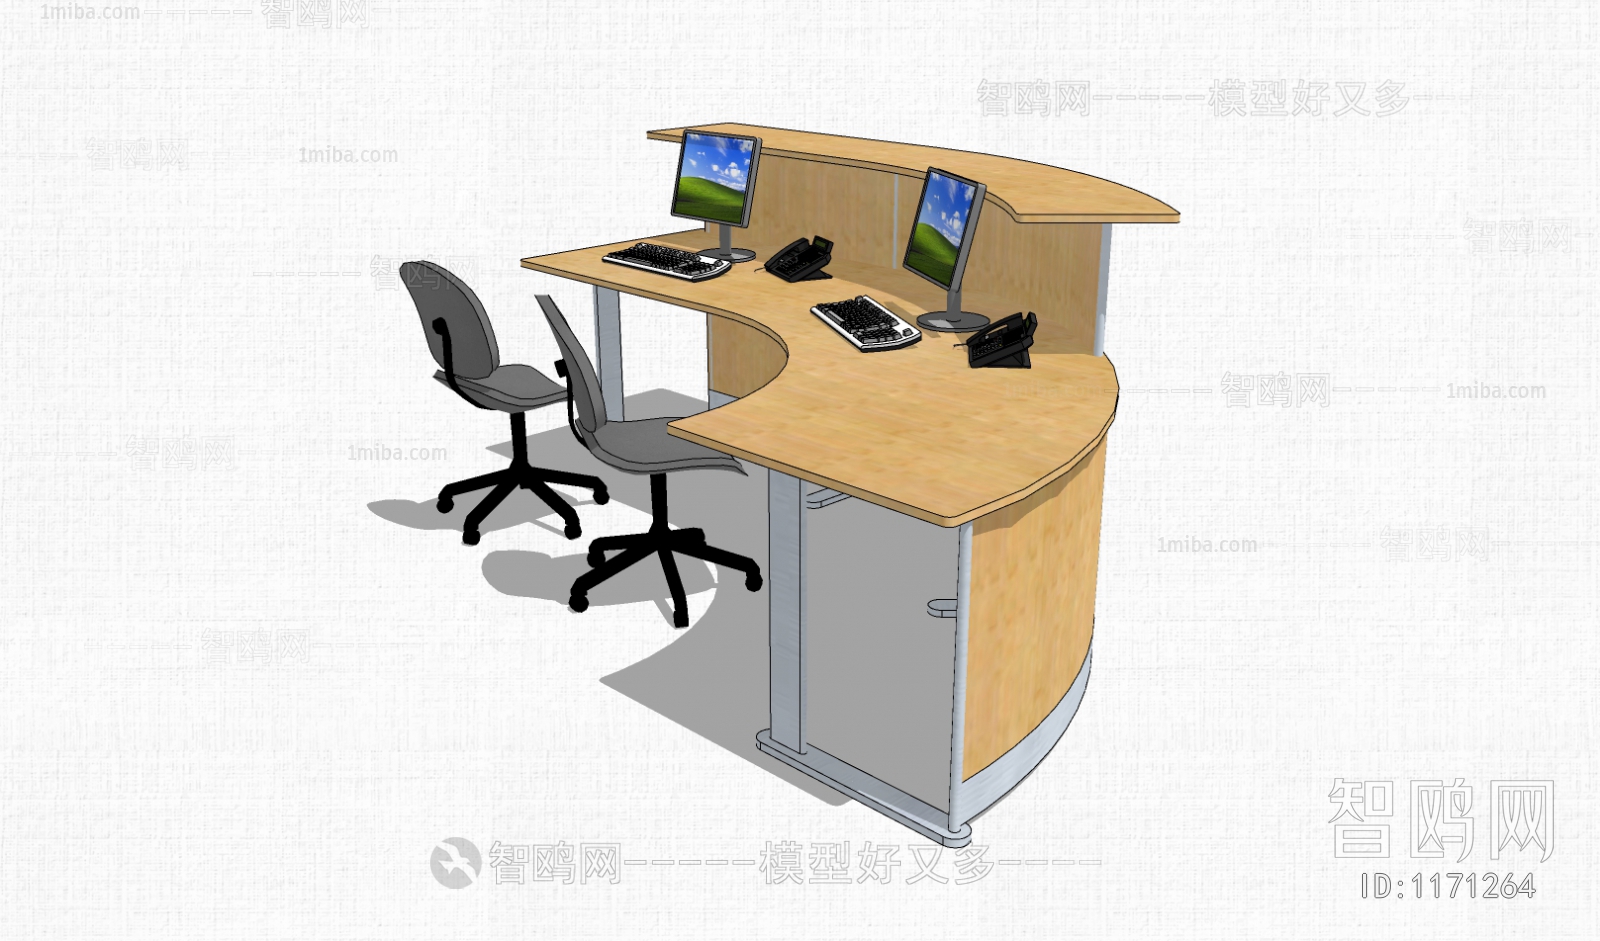 Modern Reception Desk